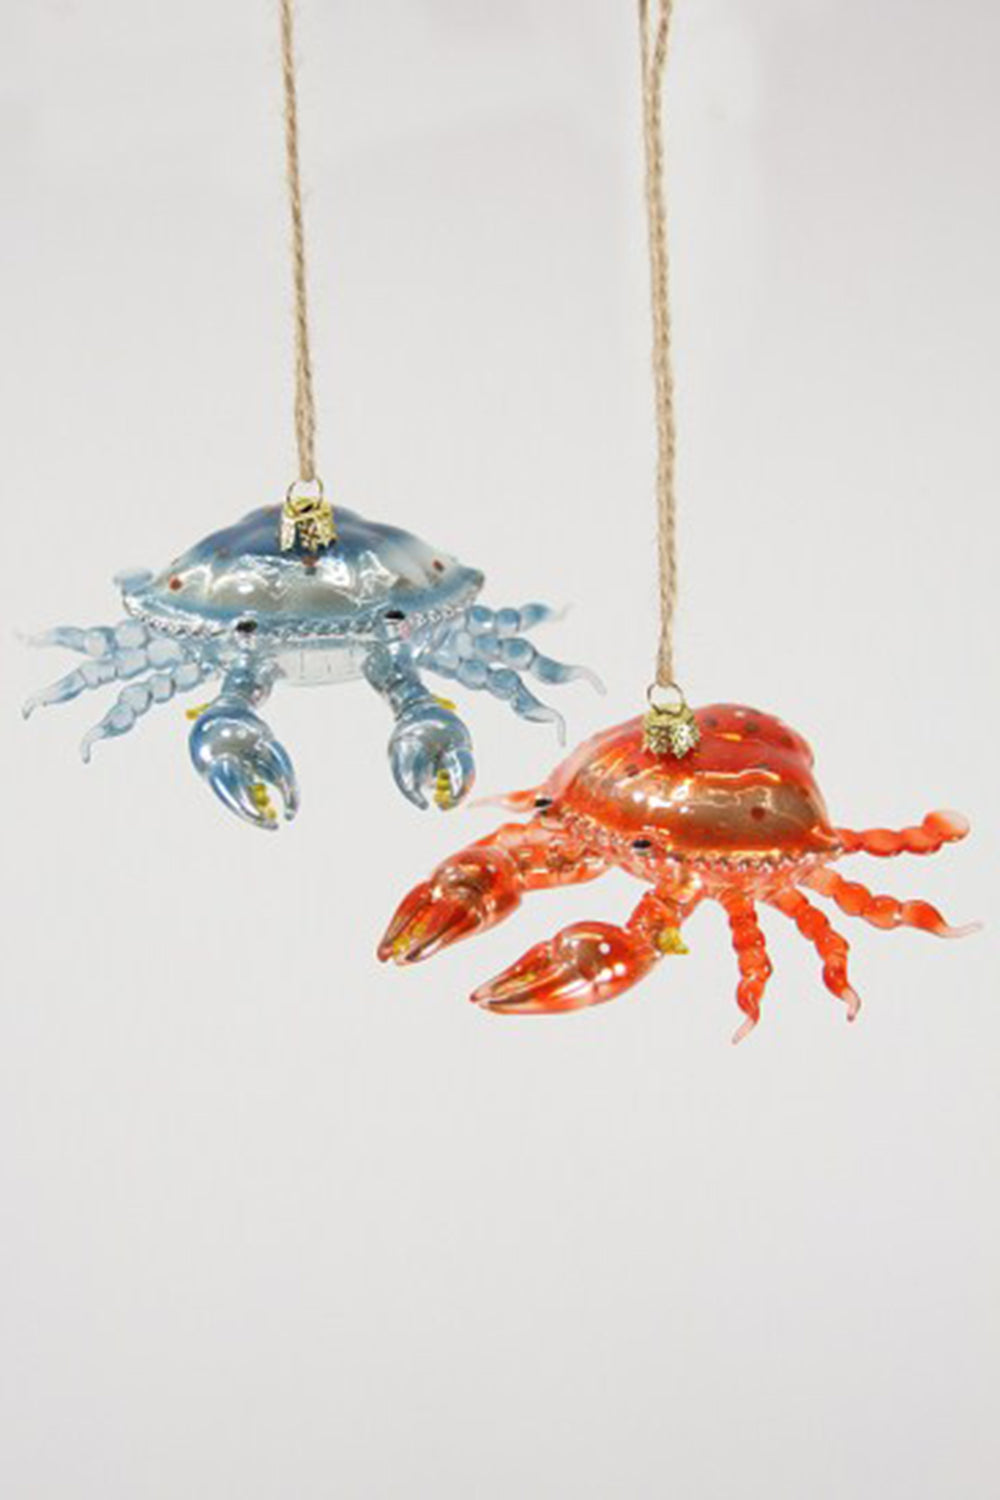 Glass Ornament - Seaside Crab